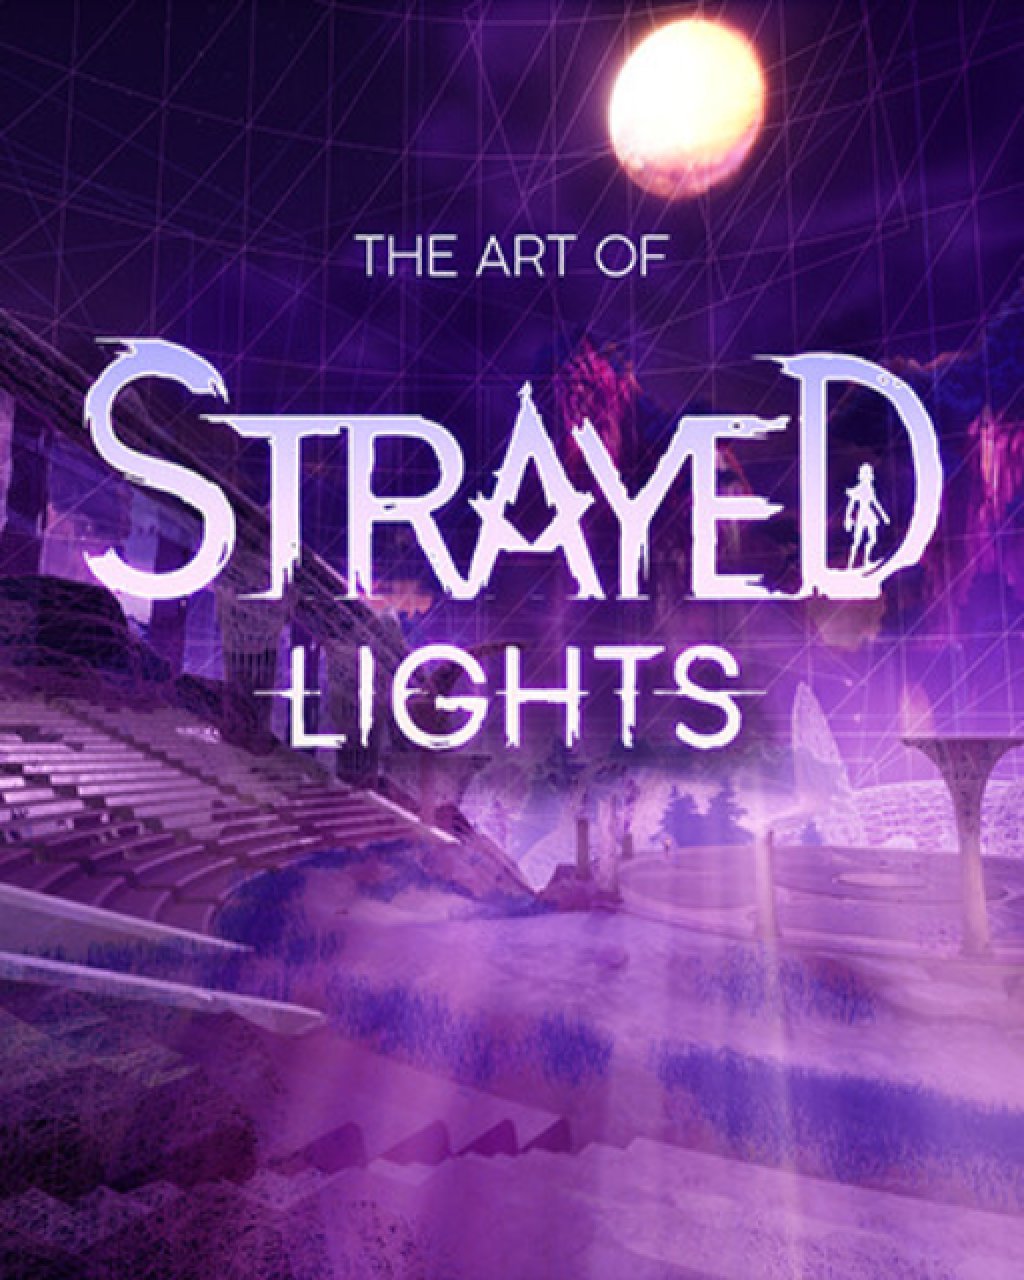 Strayed Lights Digital Art Book